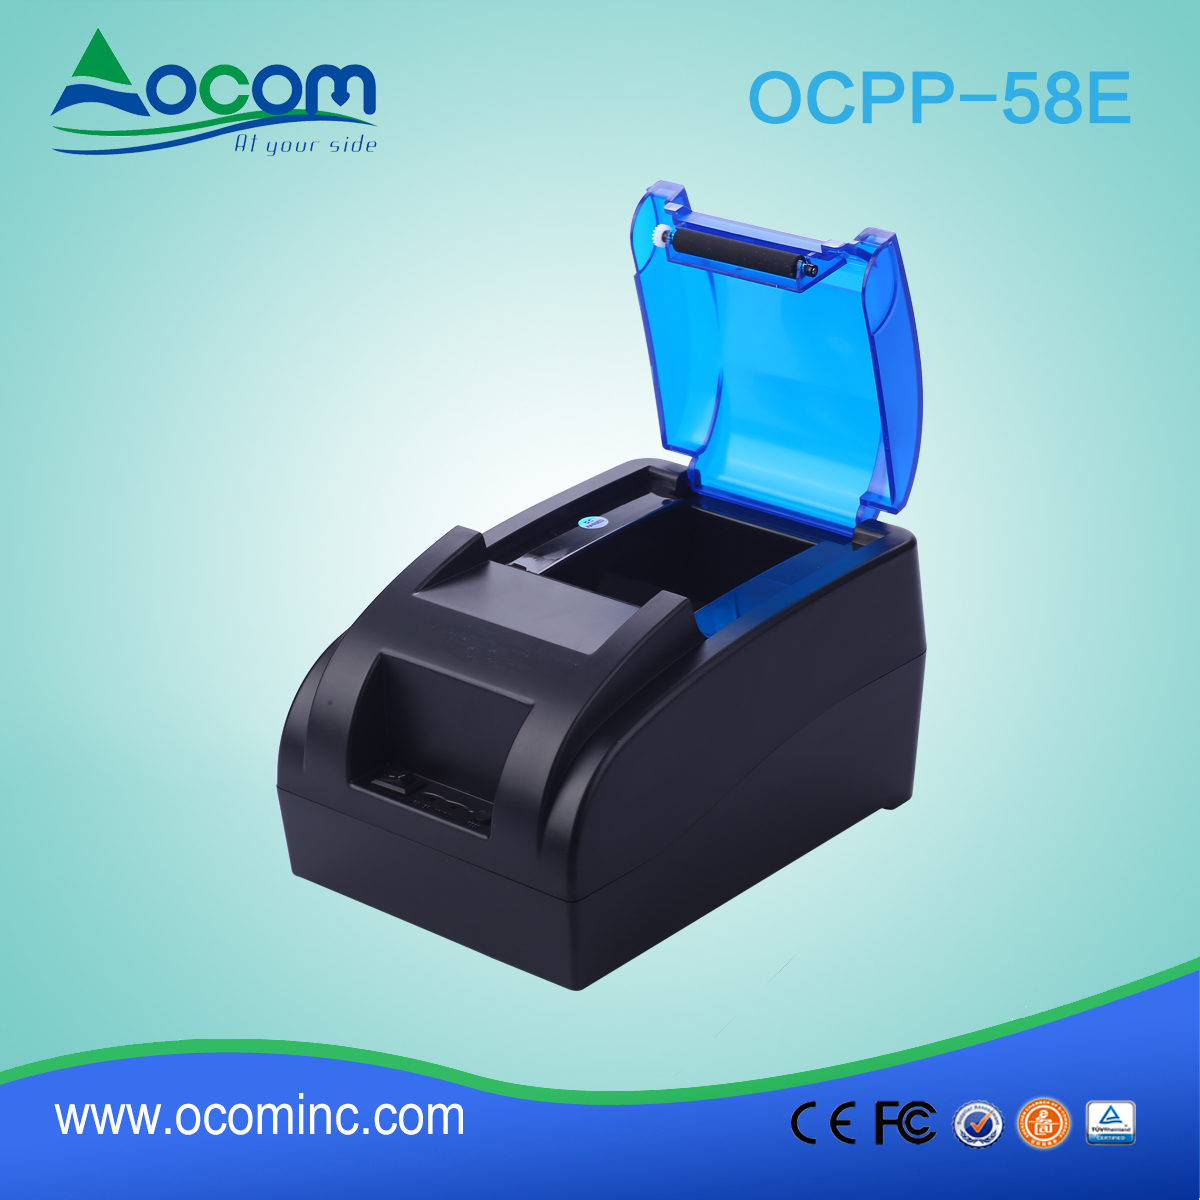 Impresora térmica de recibos de 58 mm con adaptador de corriente incorporado Puerto WIFI ocpp-58E-W